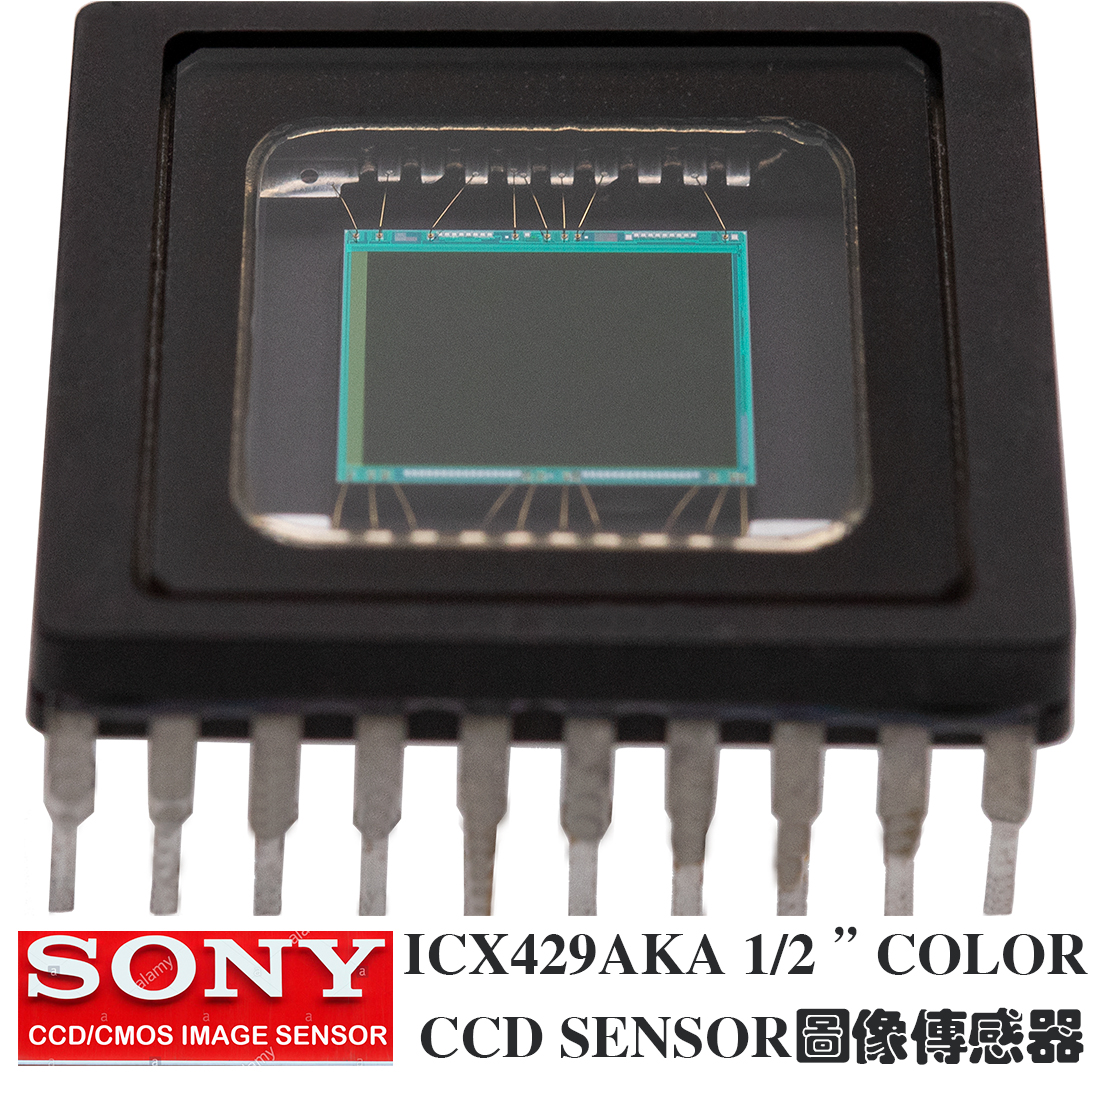 ICX429AKA 1/2-inch CCD,索尼SONY二分之一英寸 CCD,模拟安防监控摄像机CCD SENSOR,大靶面彩色图像传感器模组,大尺寸CCD ,SONY CCD代理商